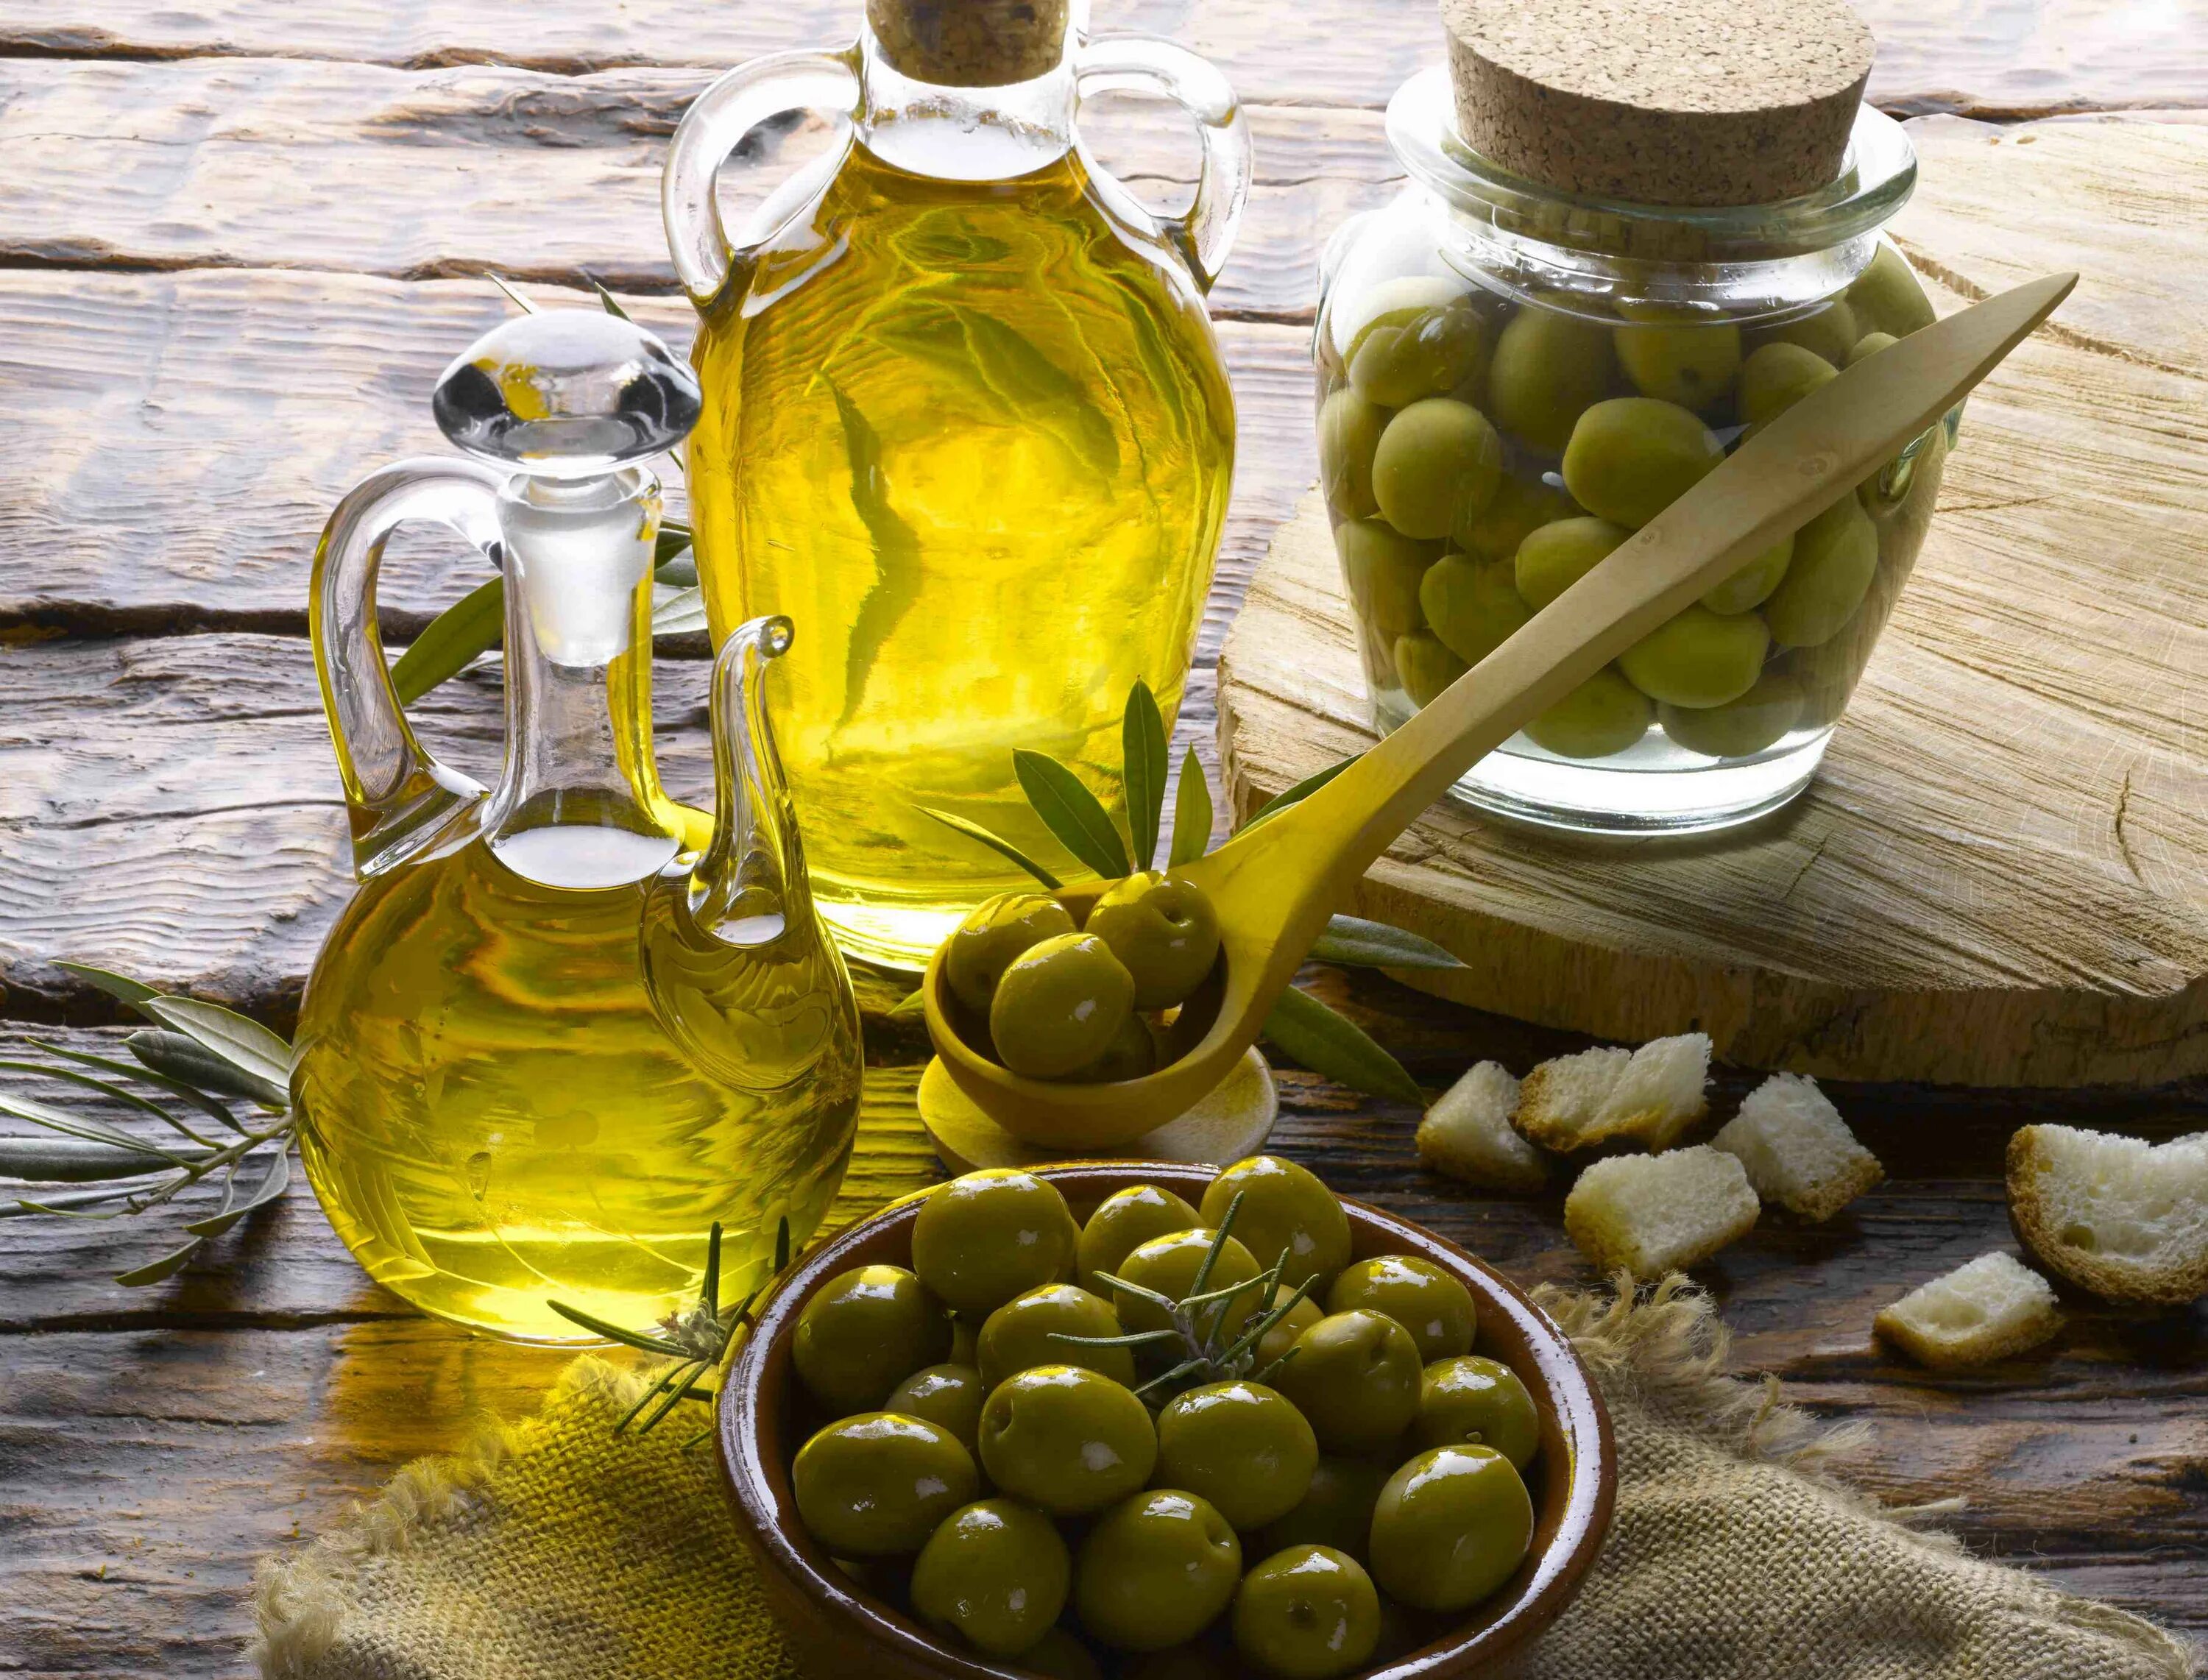 Оливковое масло Италия оил. Олив Ойл масло оливковое. Olive Oil масло оливковое. Oliva Extra Virgin Olive Oil.